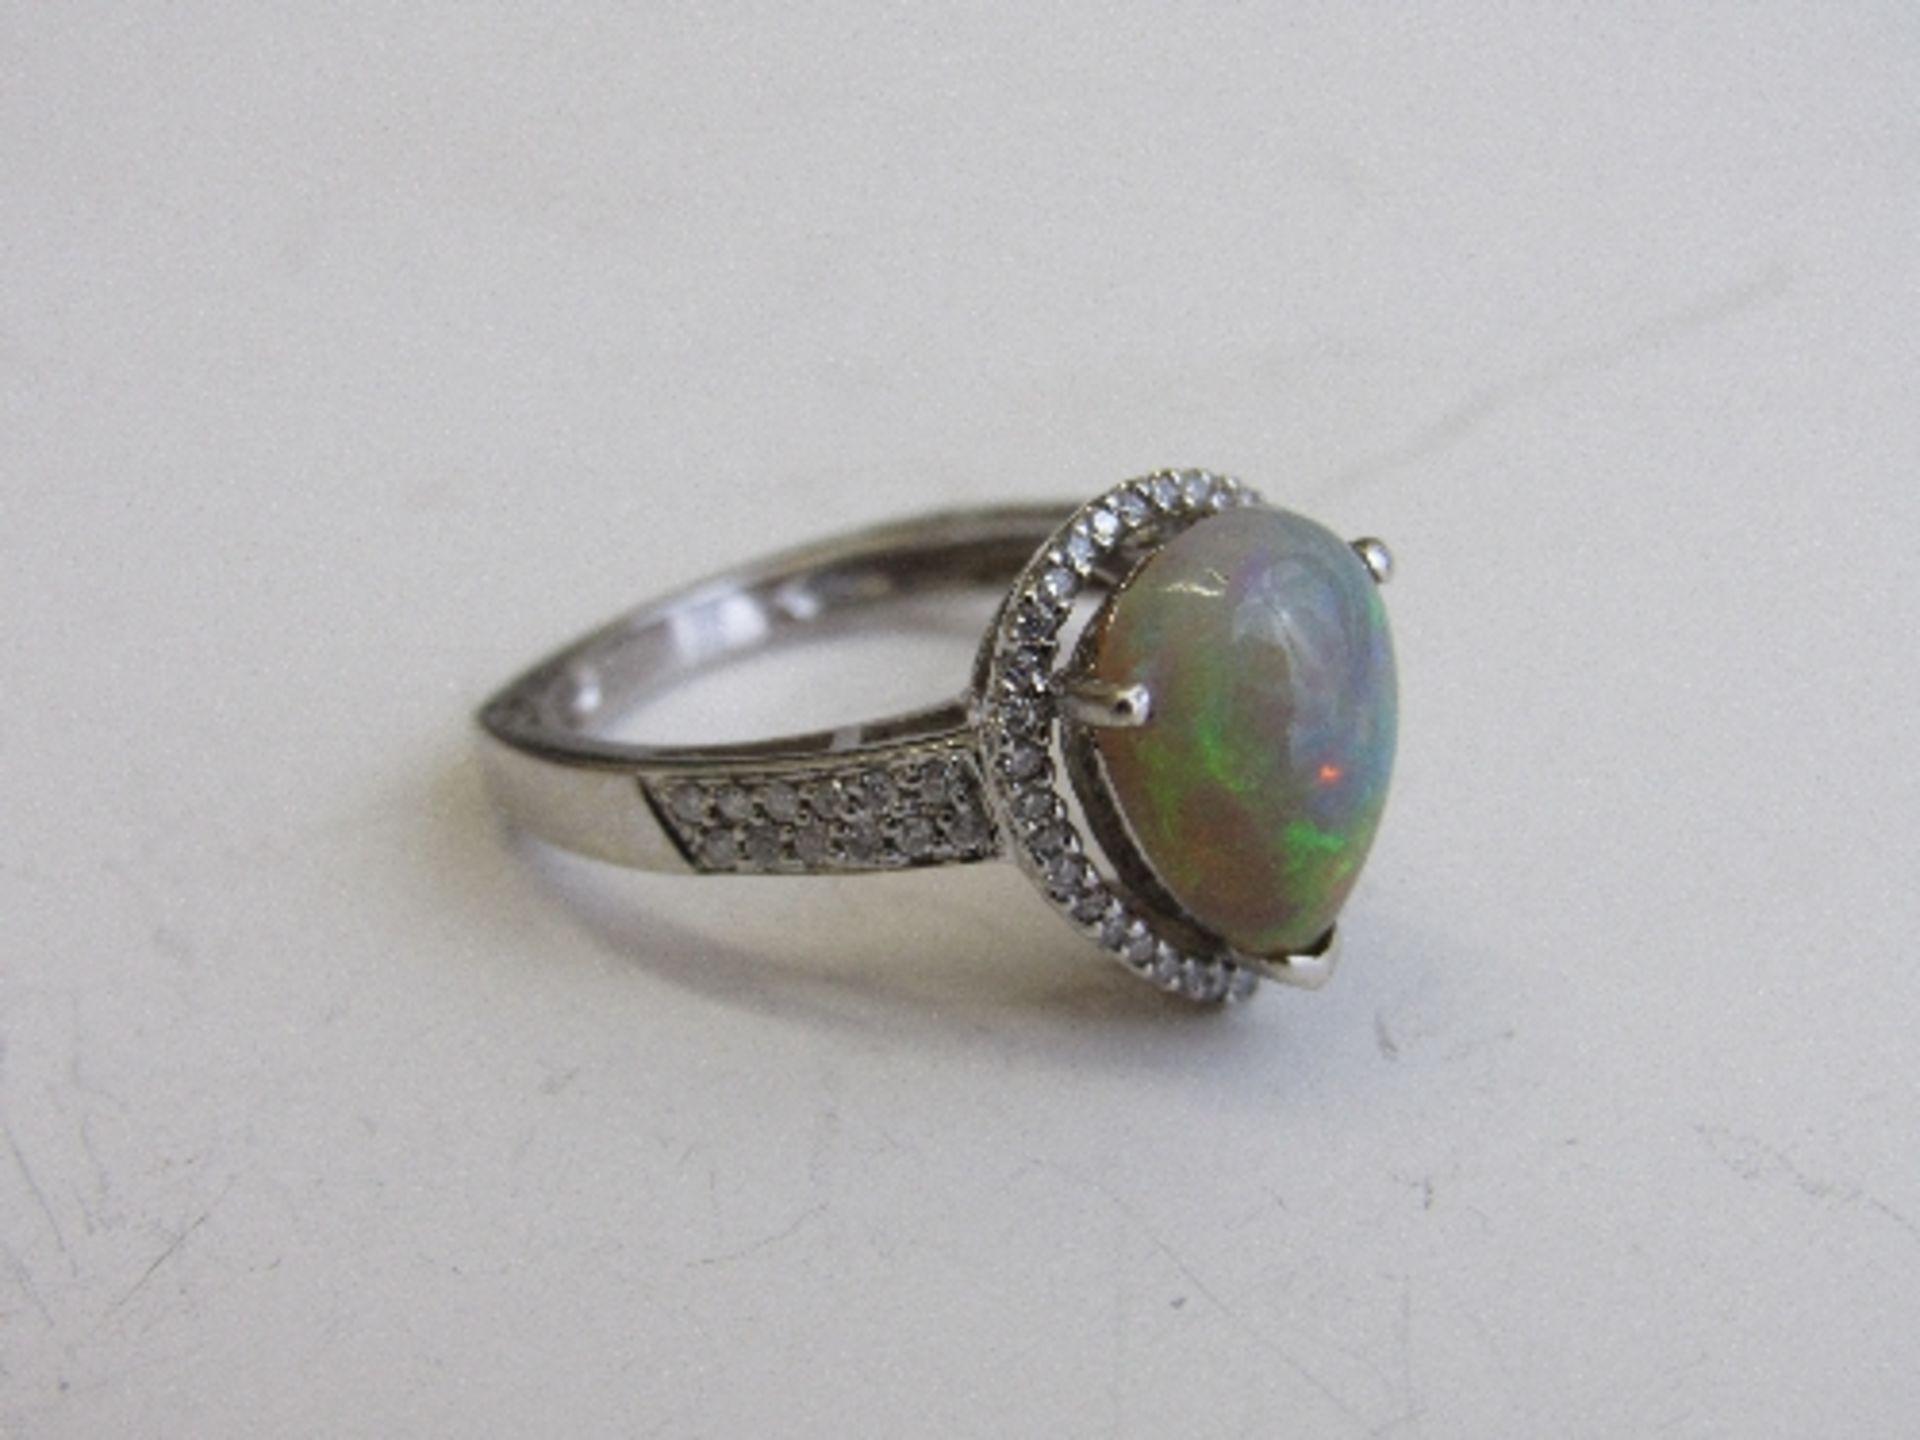 18ct white gold, diamond & pear shaped opal rings, size N. Estimate £850-1,000.